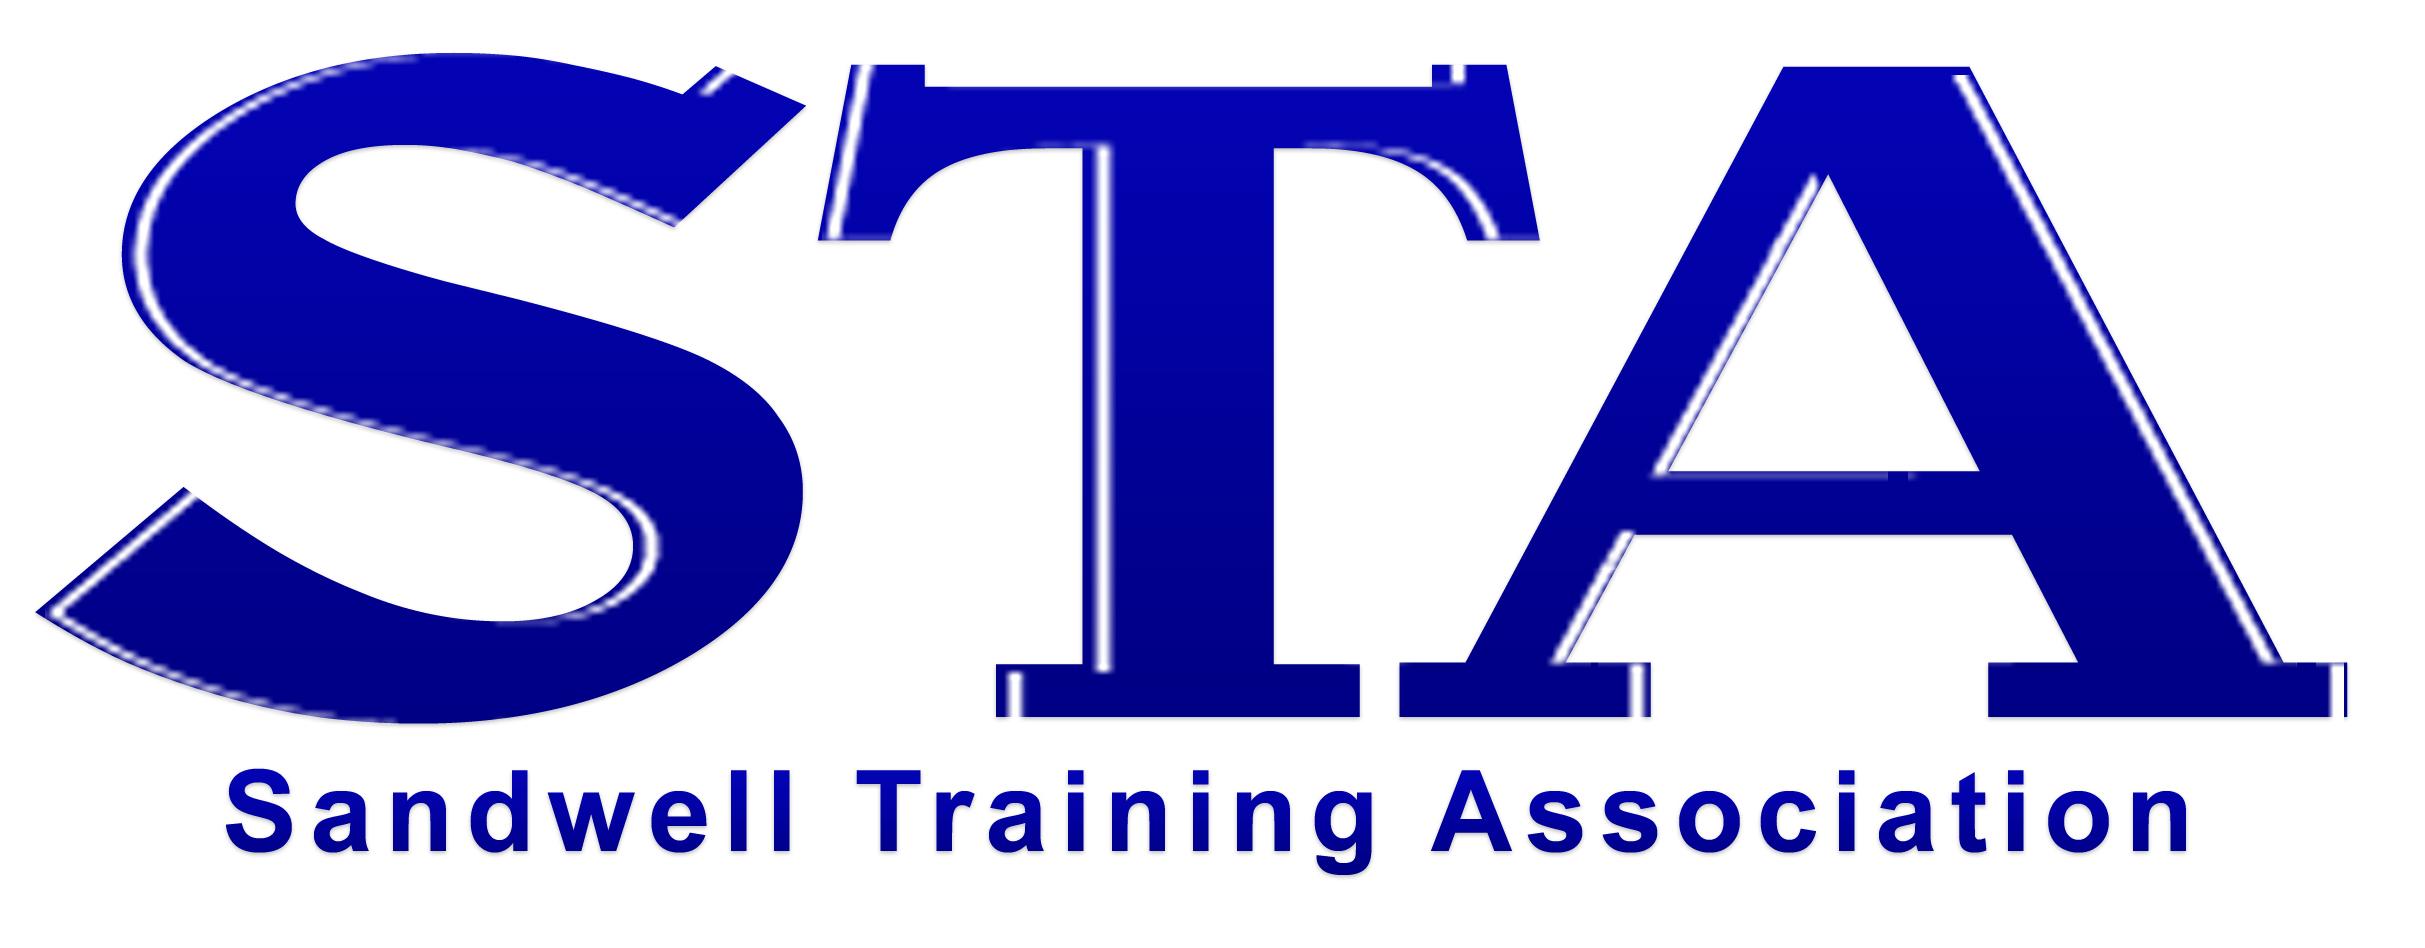 Sandwell Training Association Ltd Logo